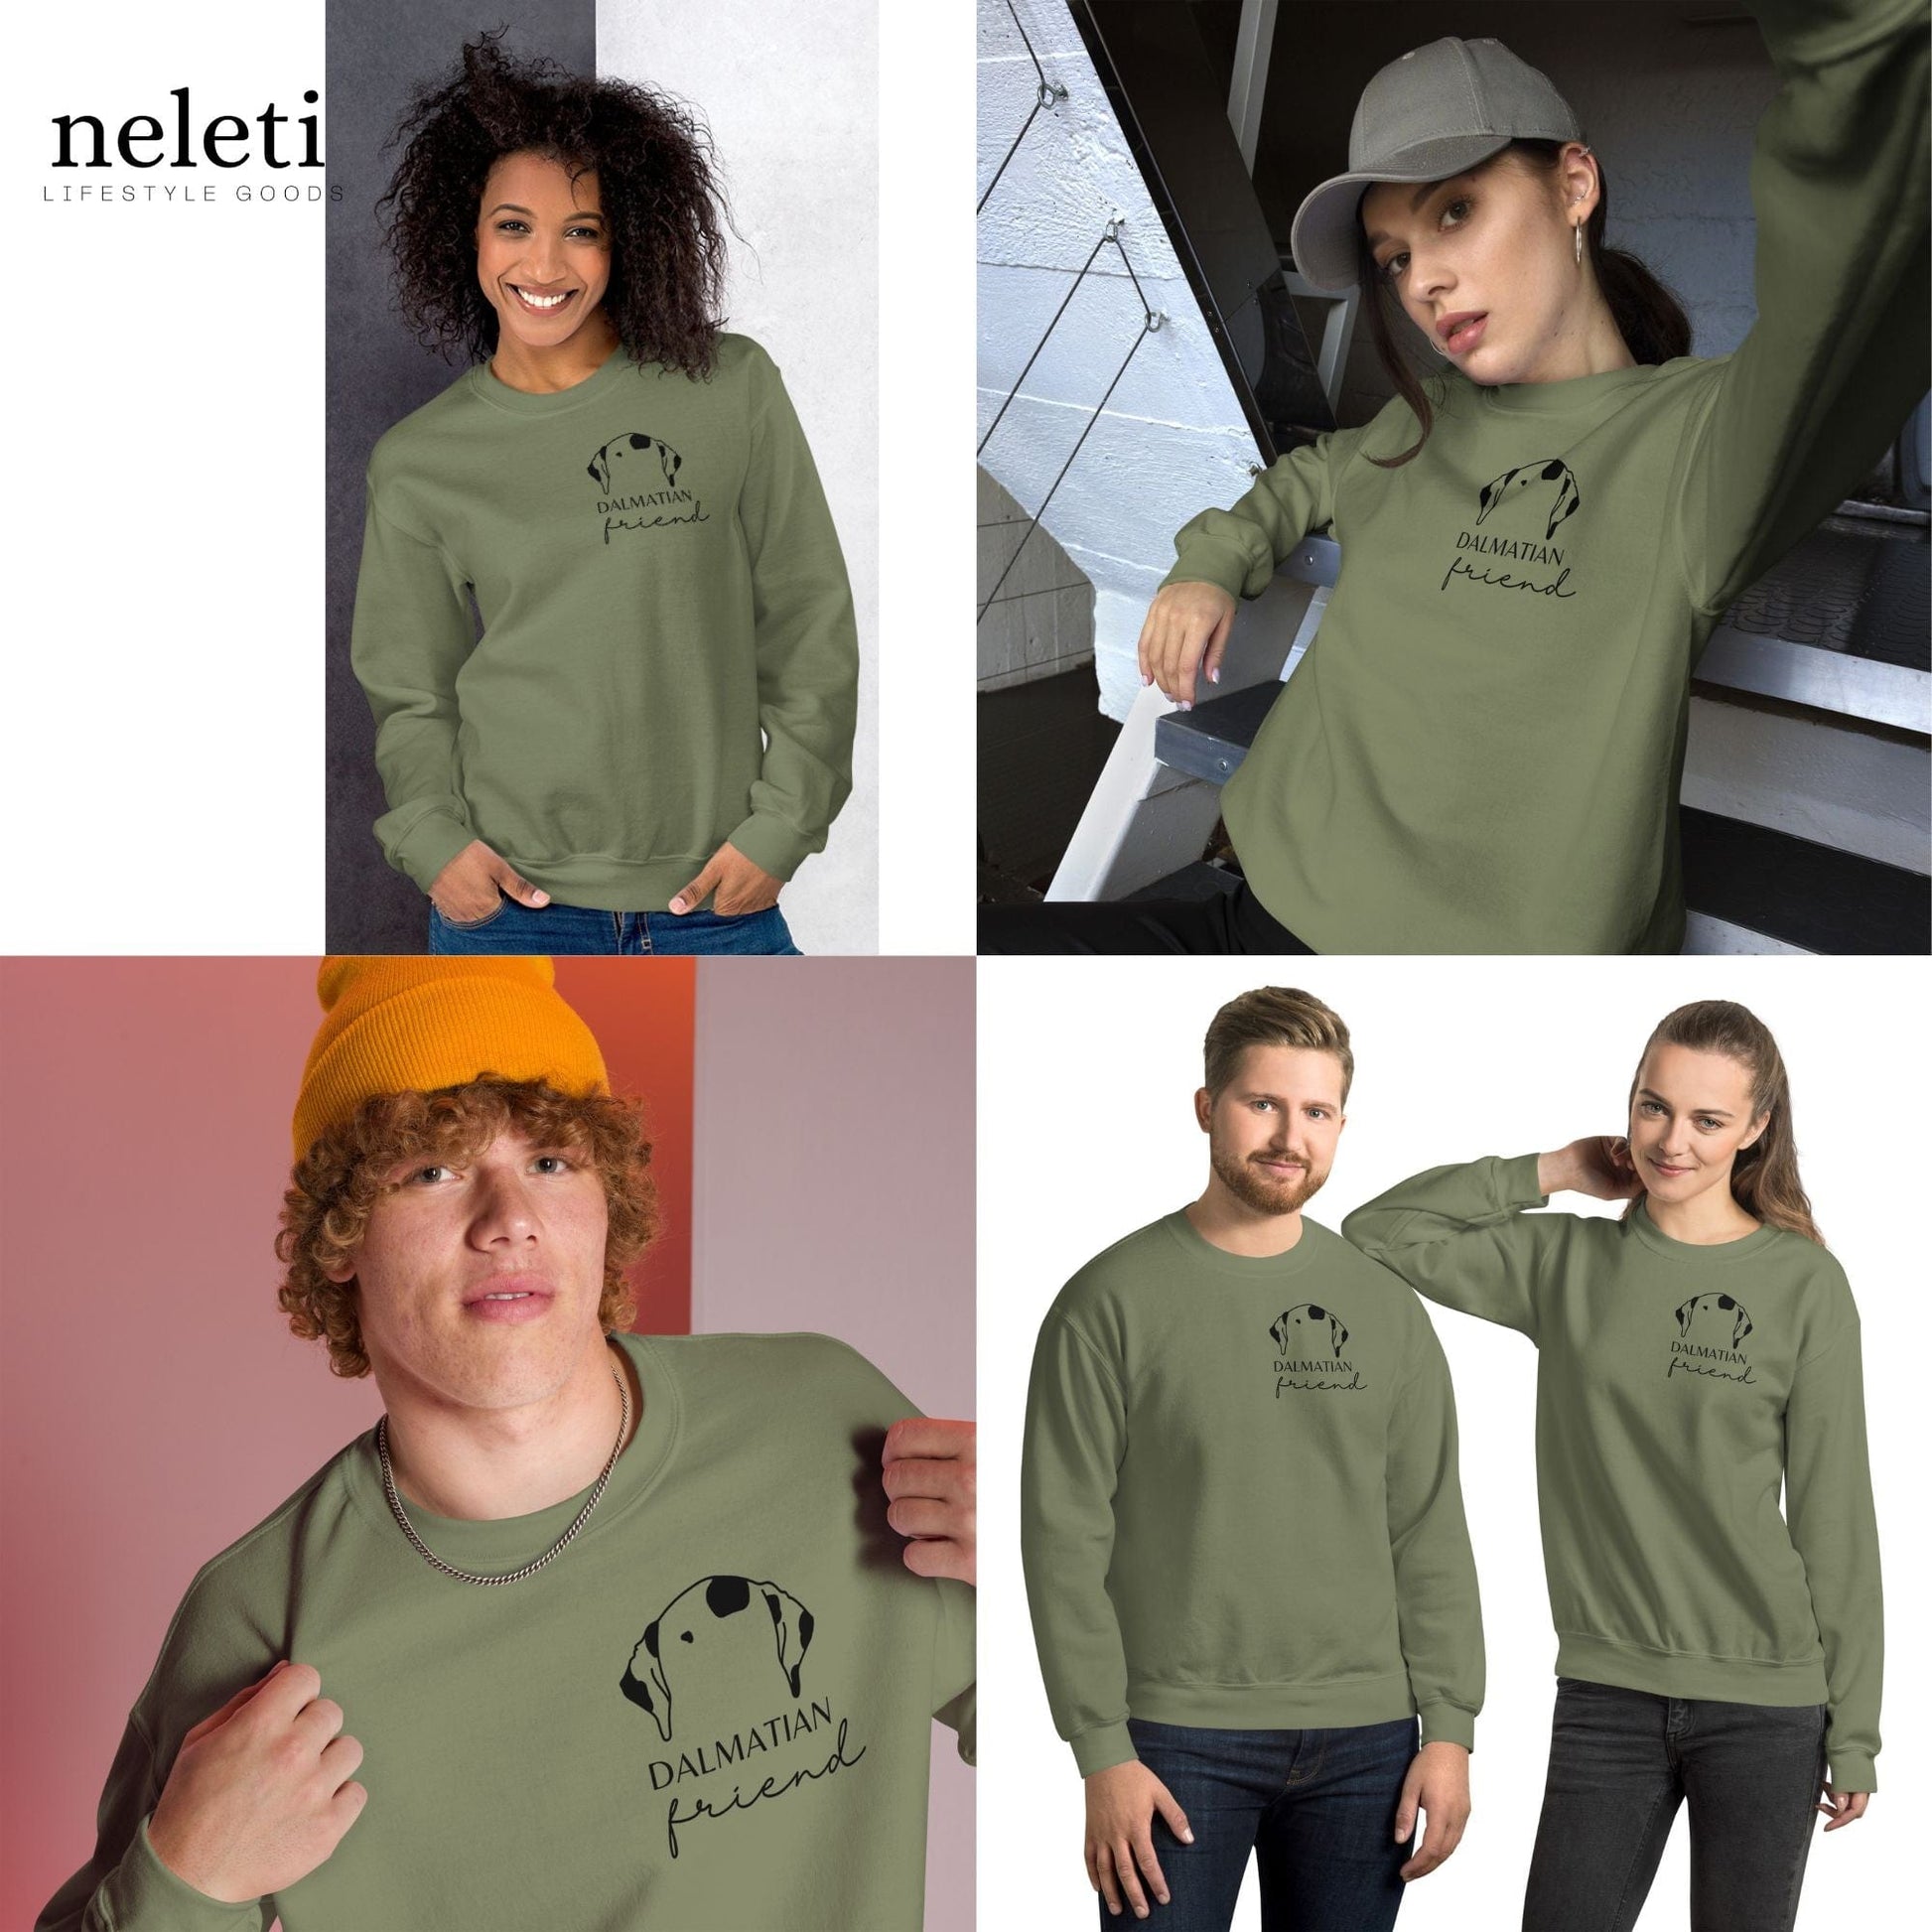    neleti.com-custom-miliraty-green-sweatshirt-with-dog-ears